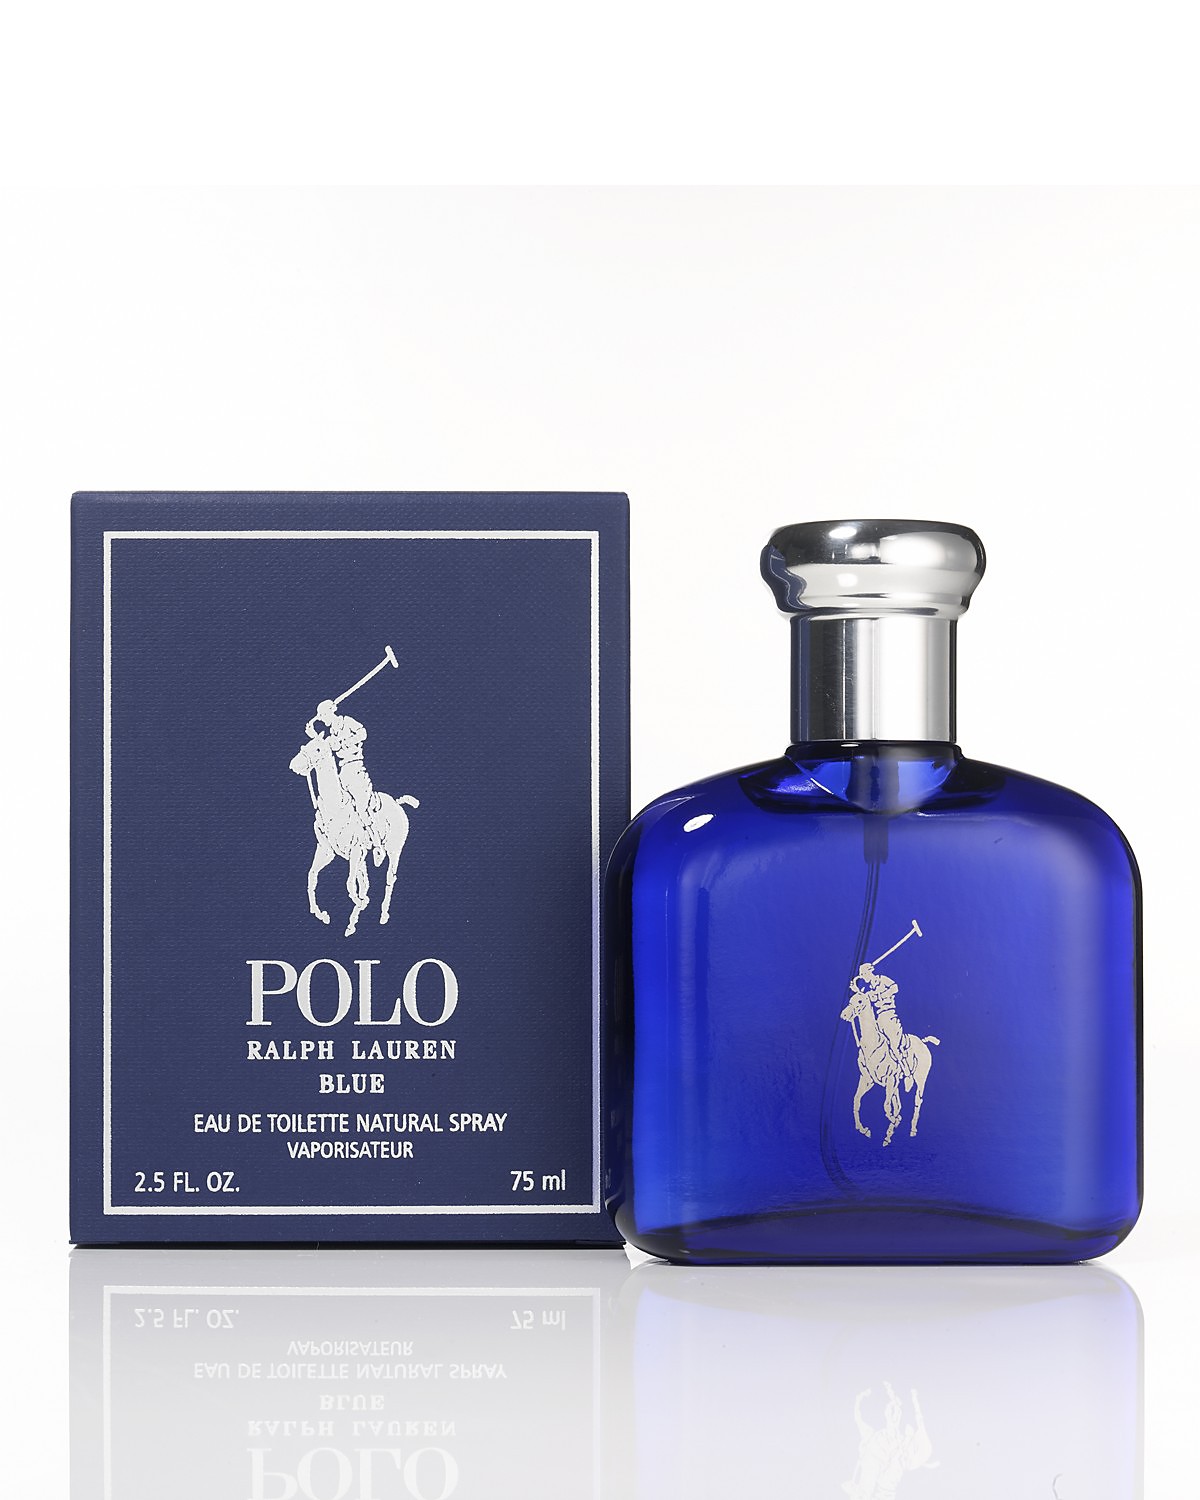 Polo Blue Ralph Lauren cologne - a fragrance for men 2003